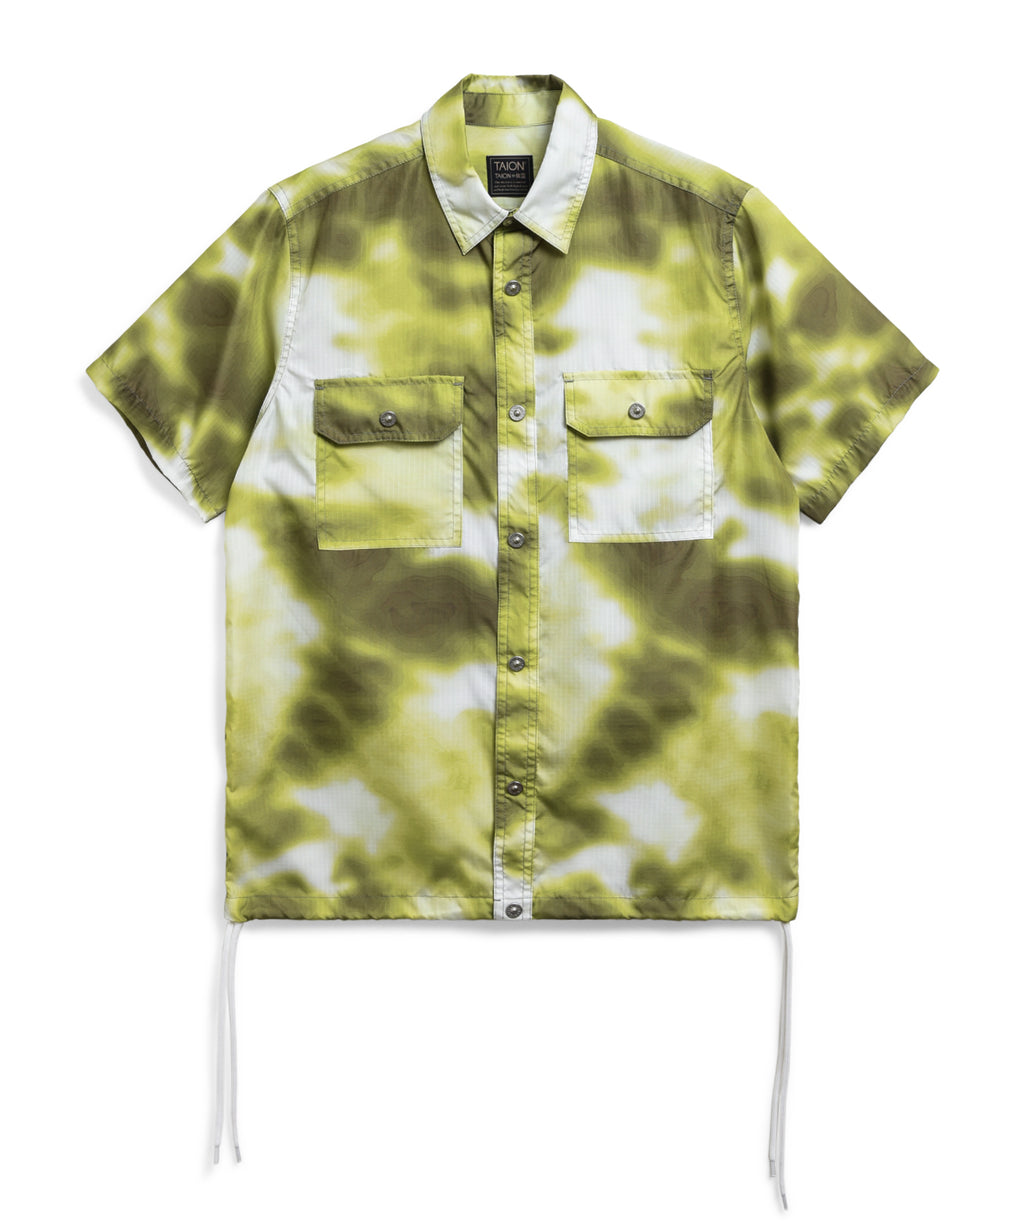 Taion Military Half Sleeve Shirts Tie-Dye